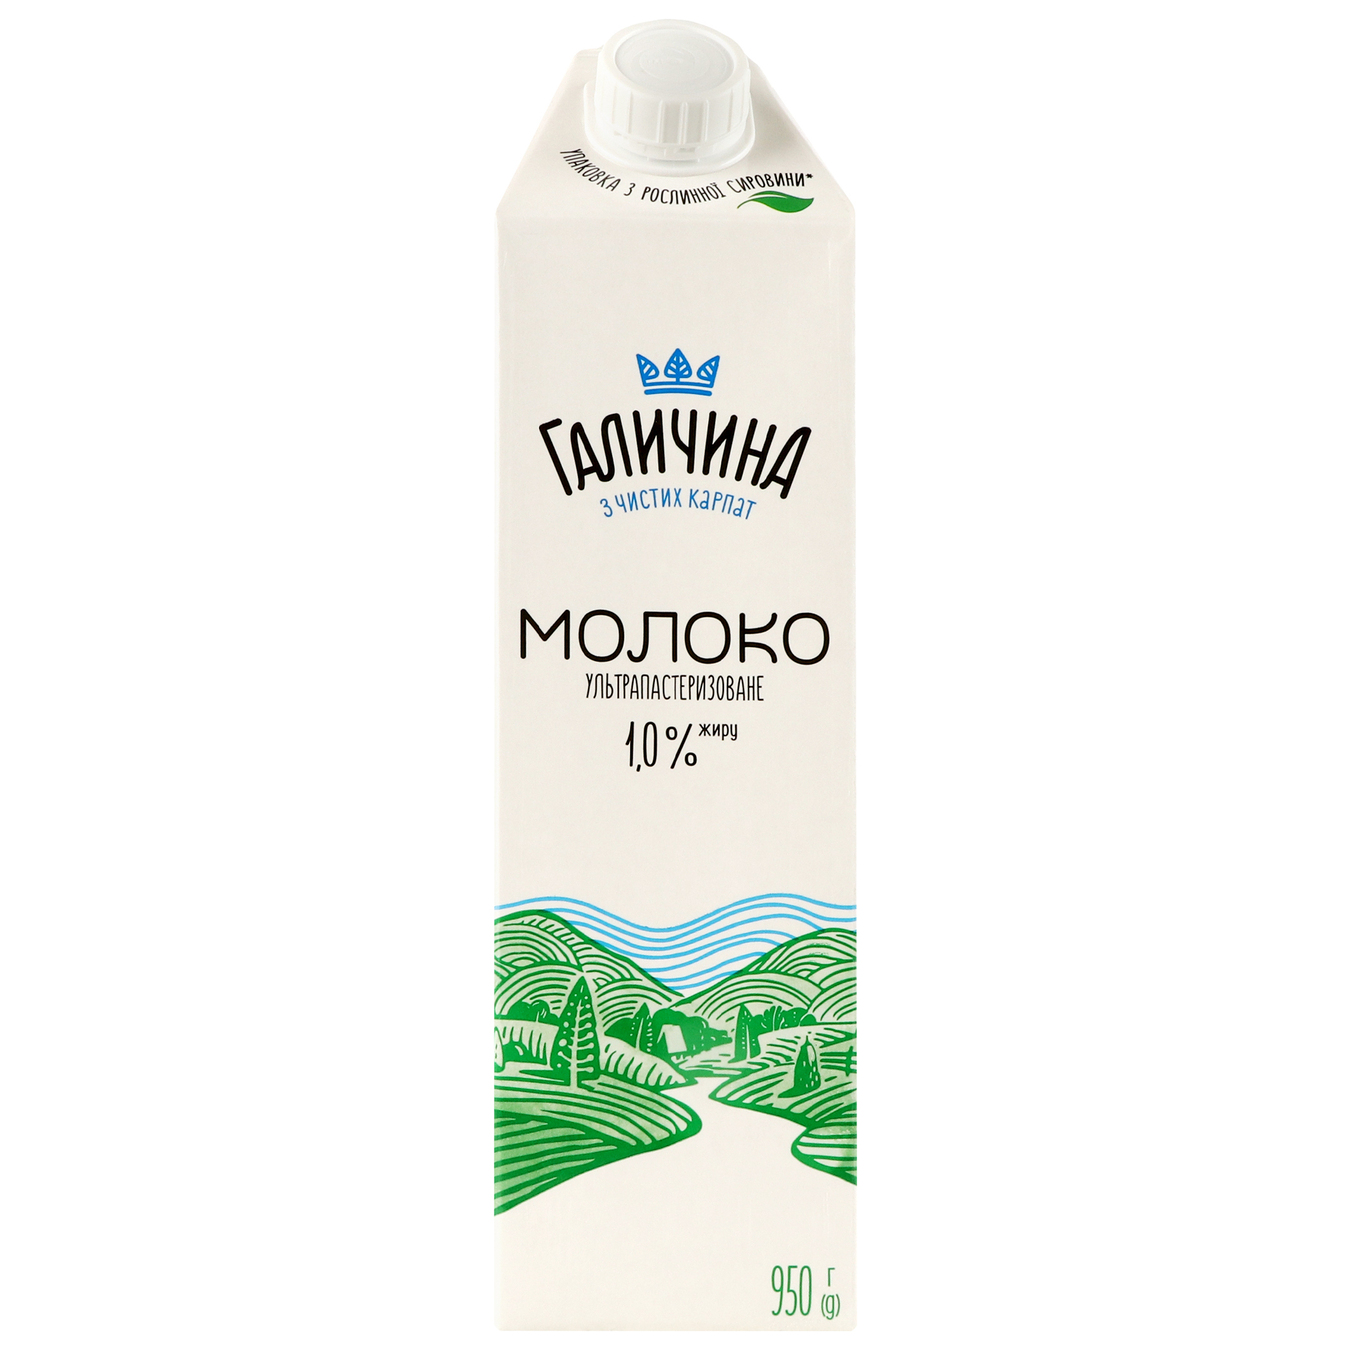 Молоко Галичина 1% 950г